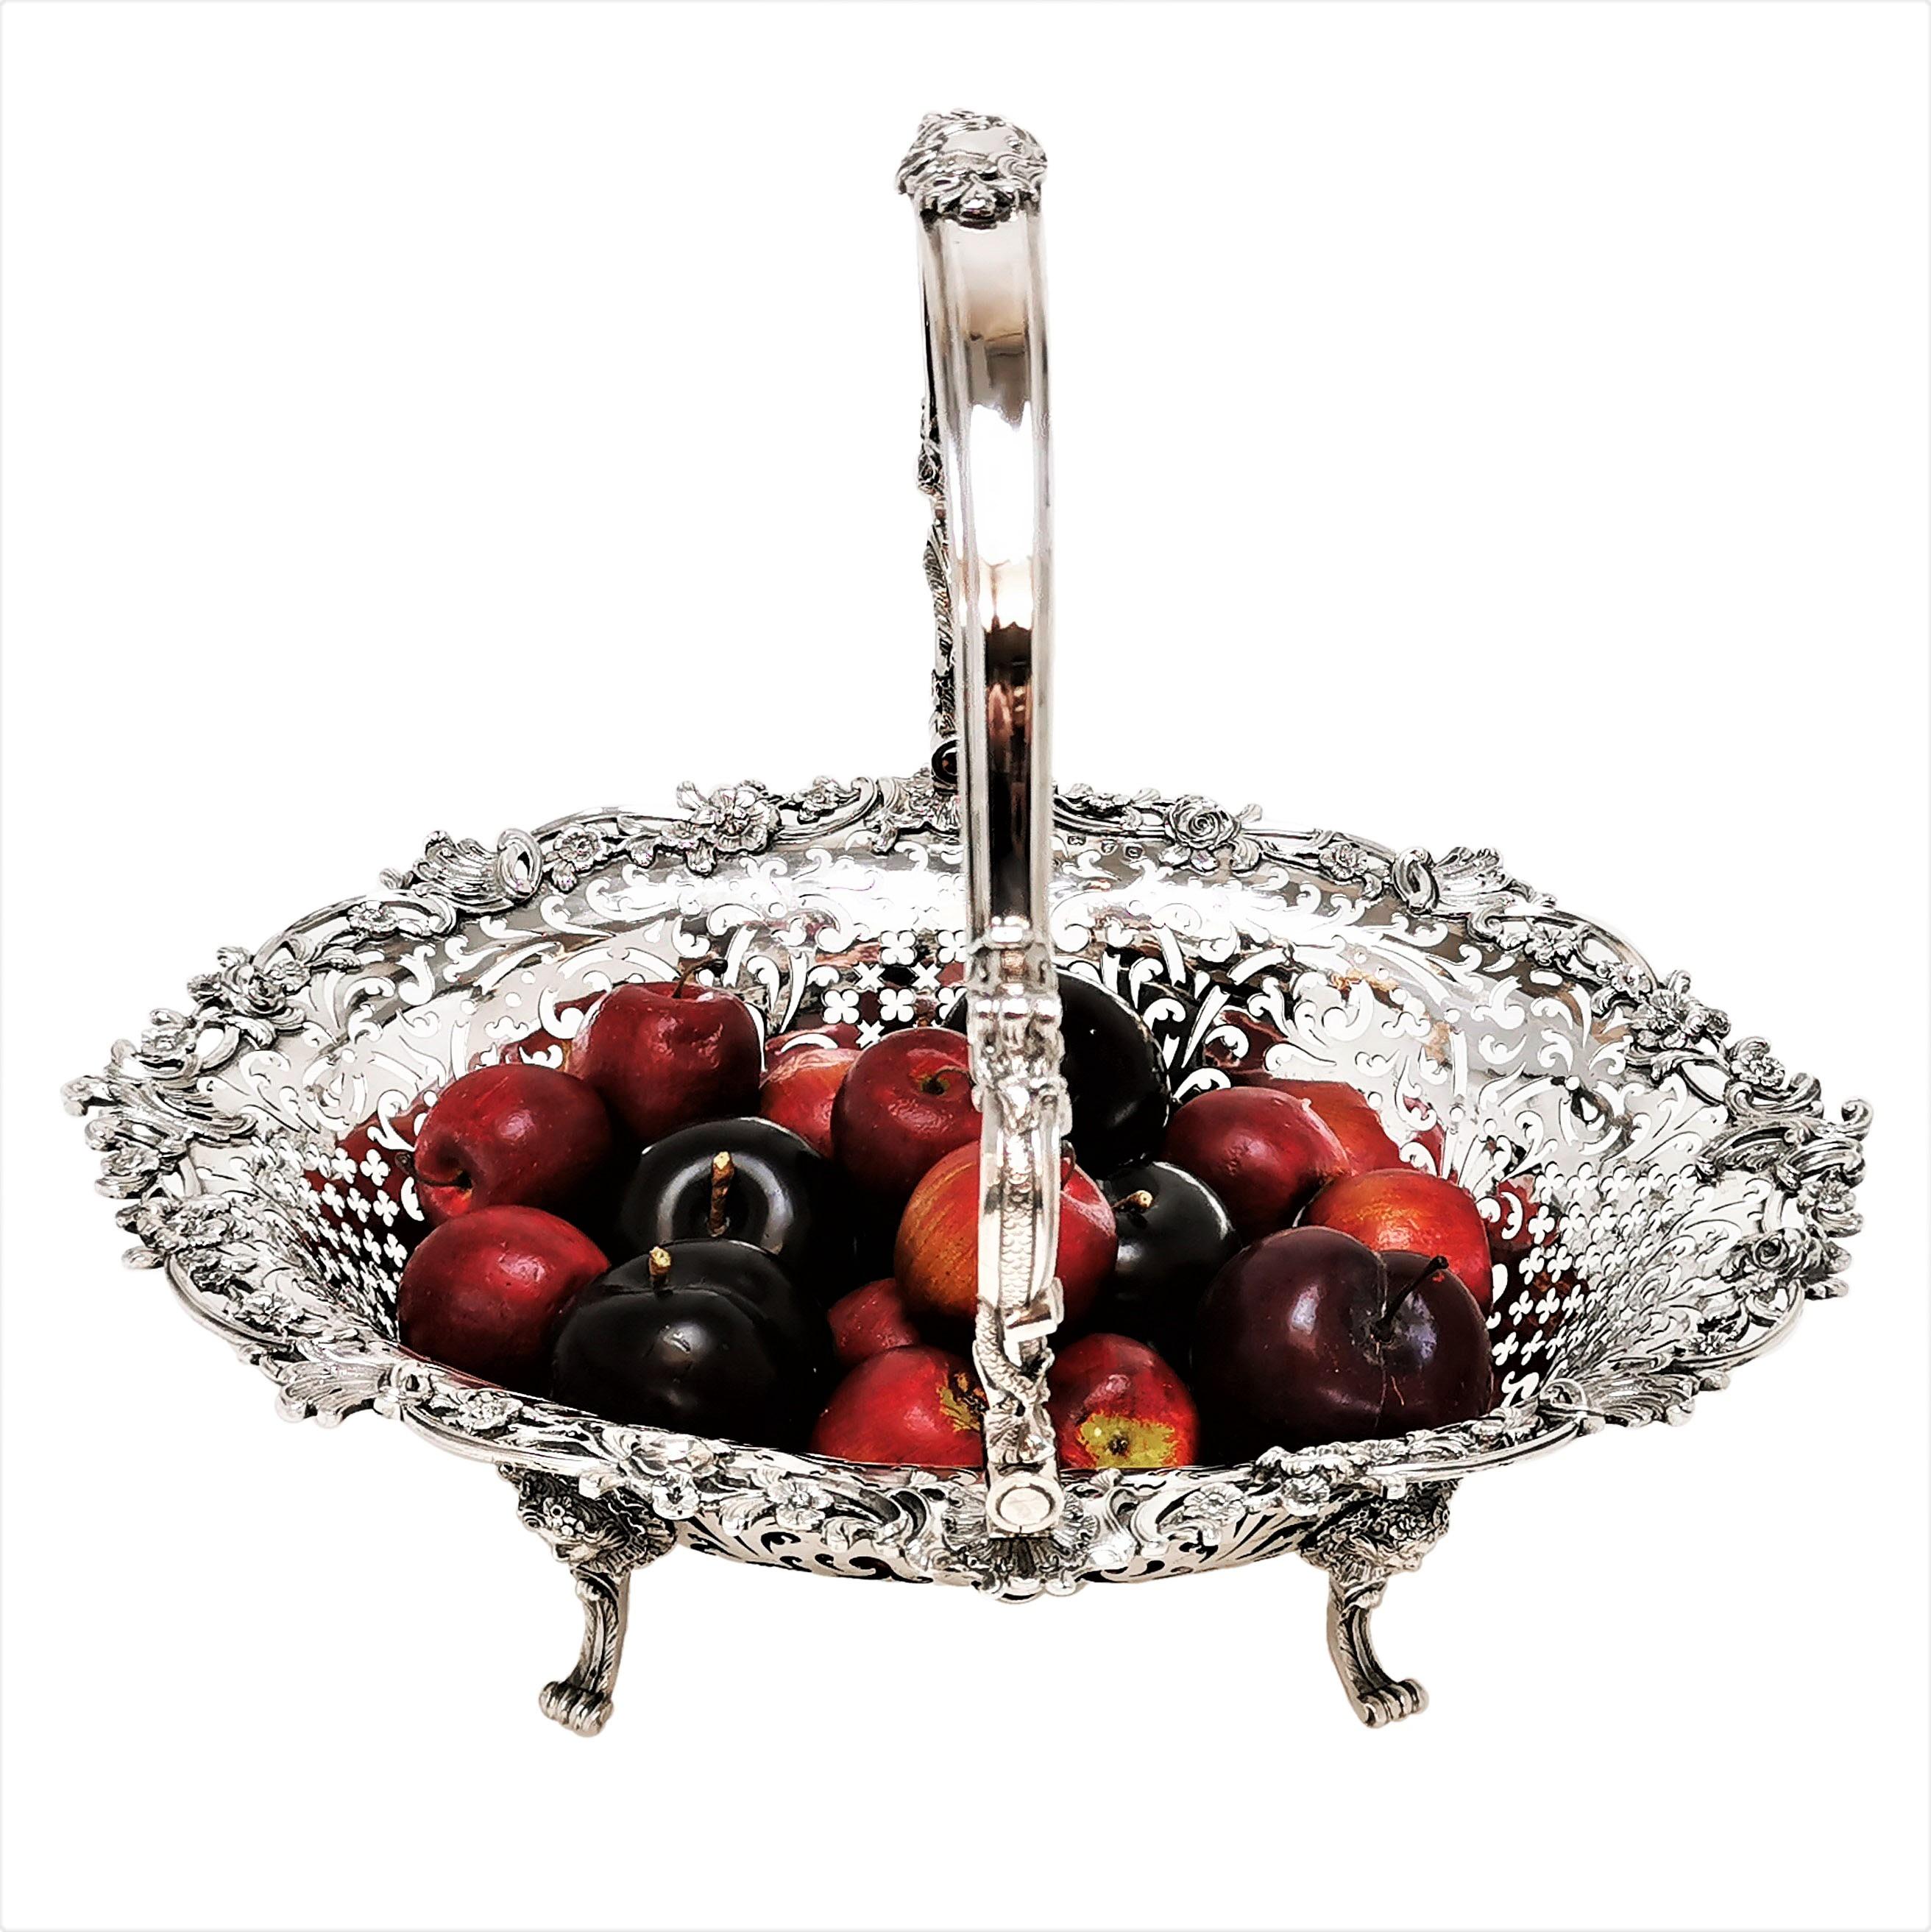 English Antique George III Sterling Silver Basket 1771 Cake Fruit Bread Swing Handled